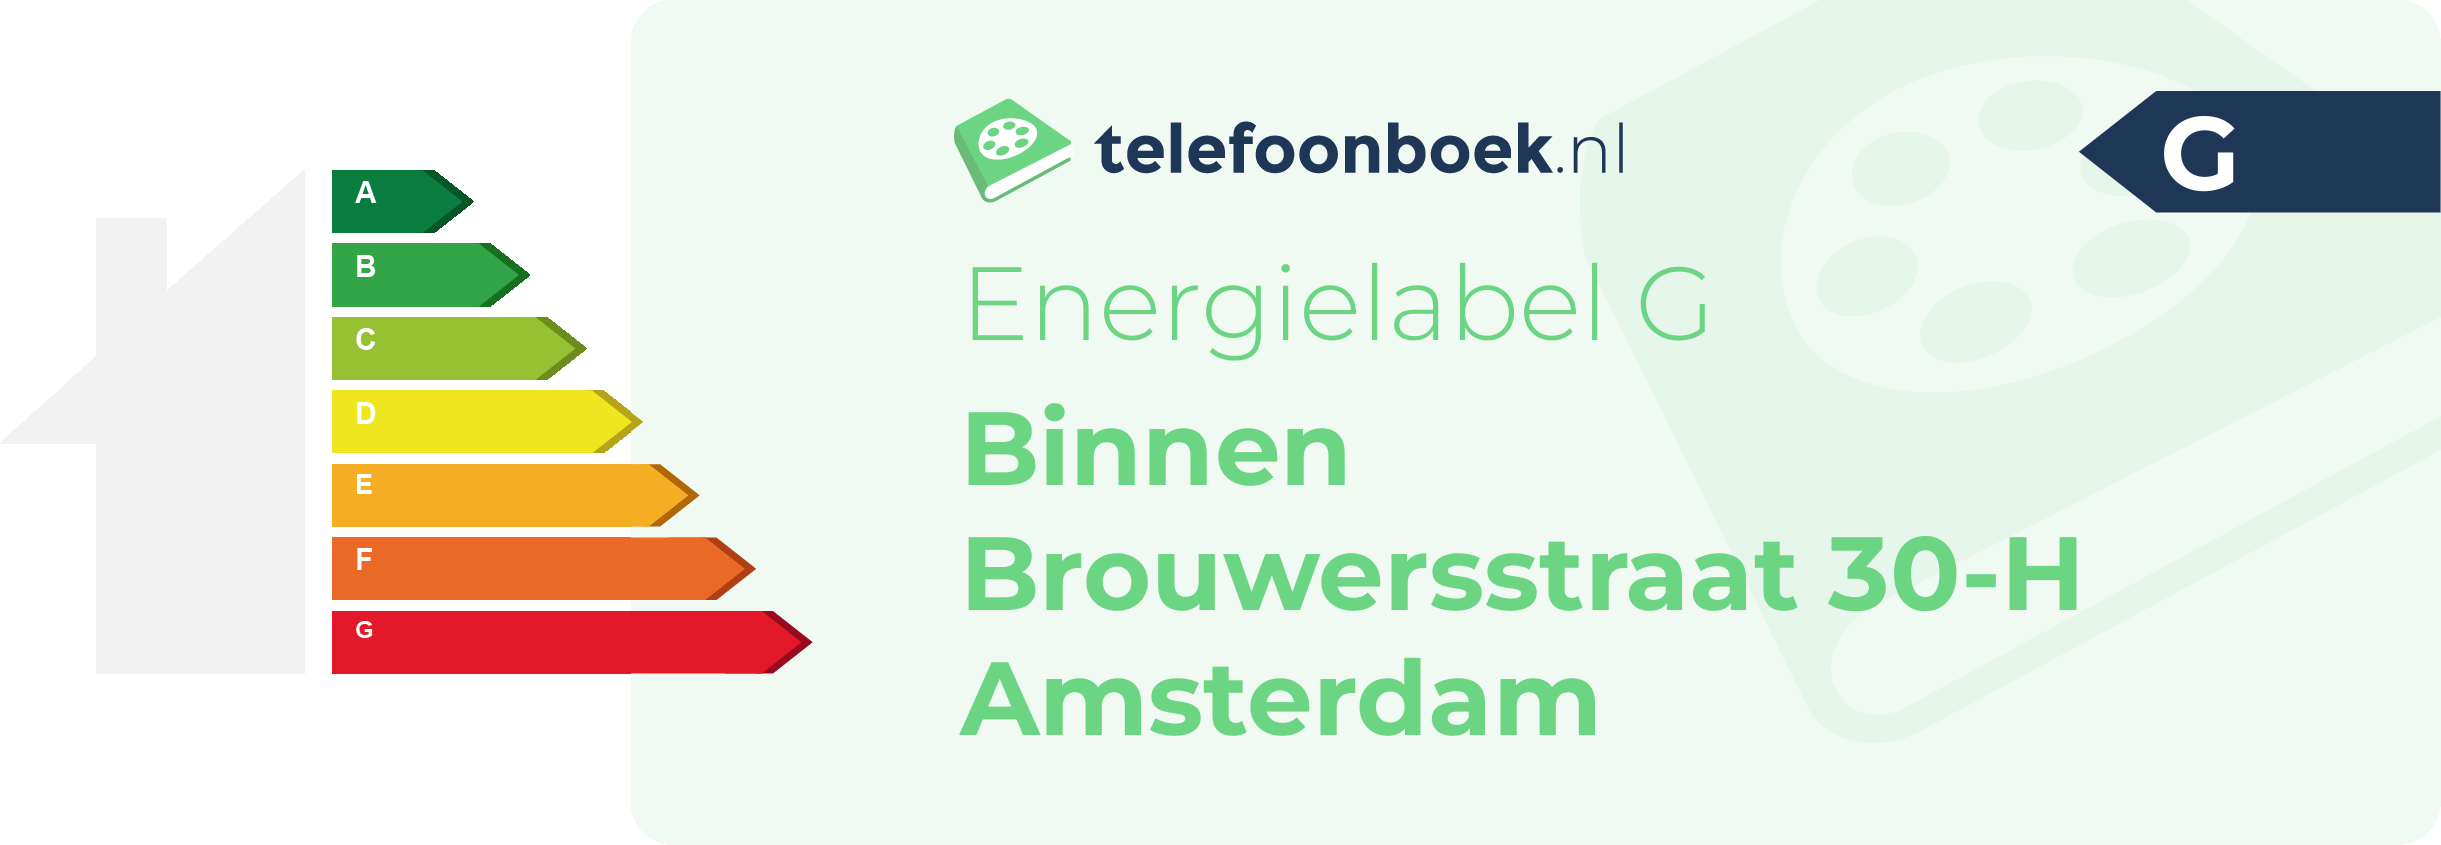 Energielabel Binnen Brouwersstraat 30-H Amsterdam